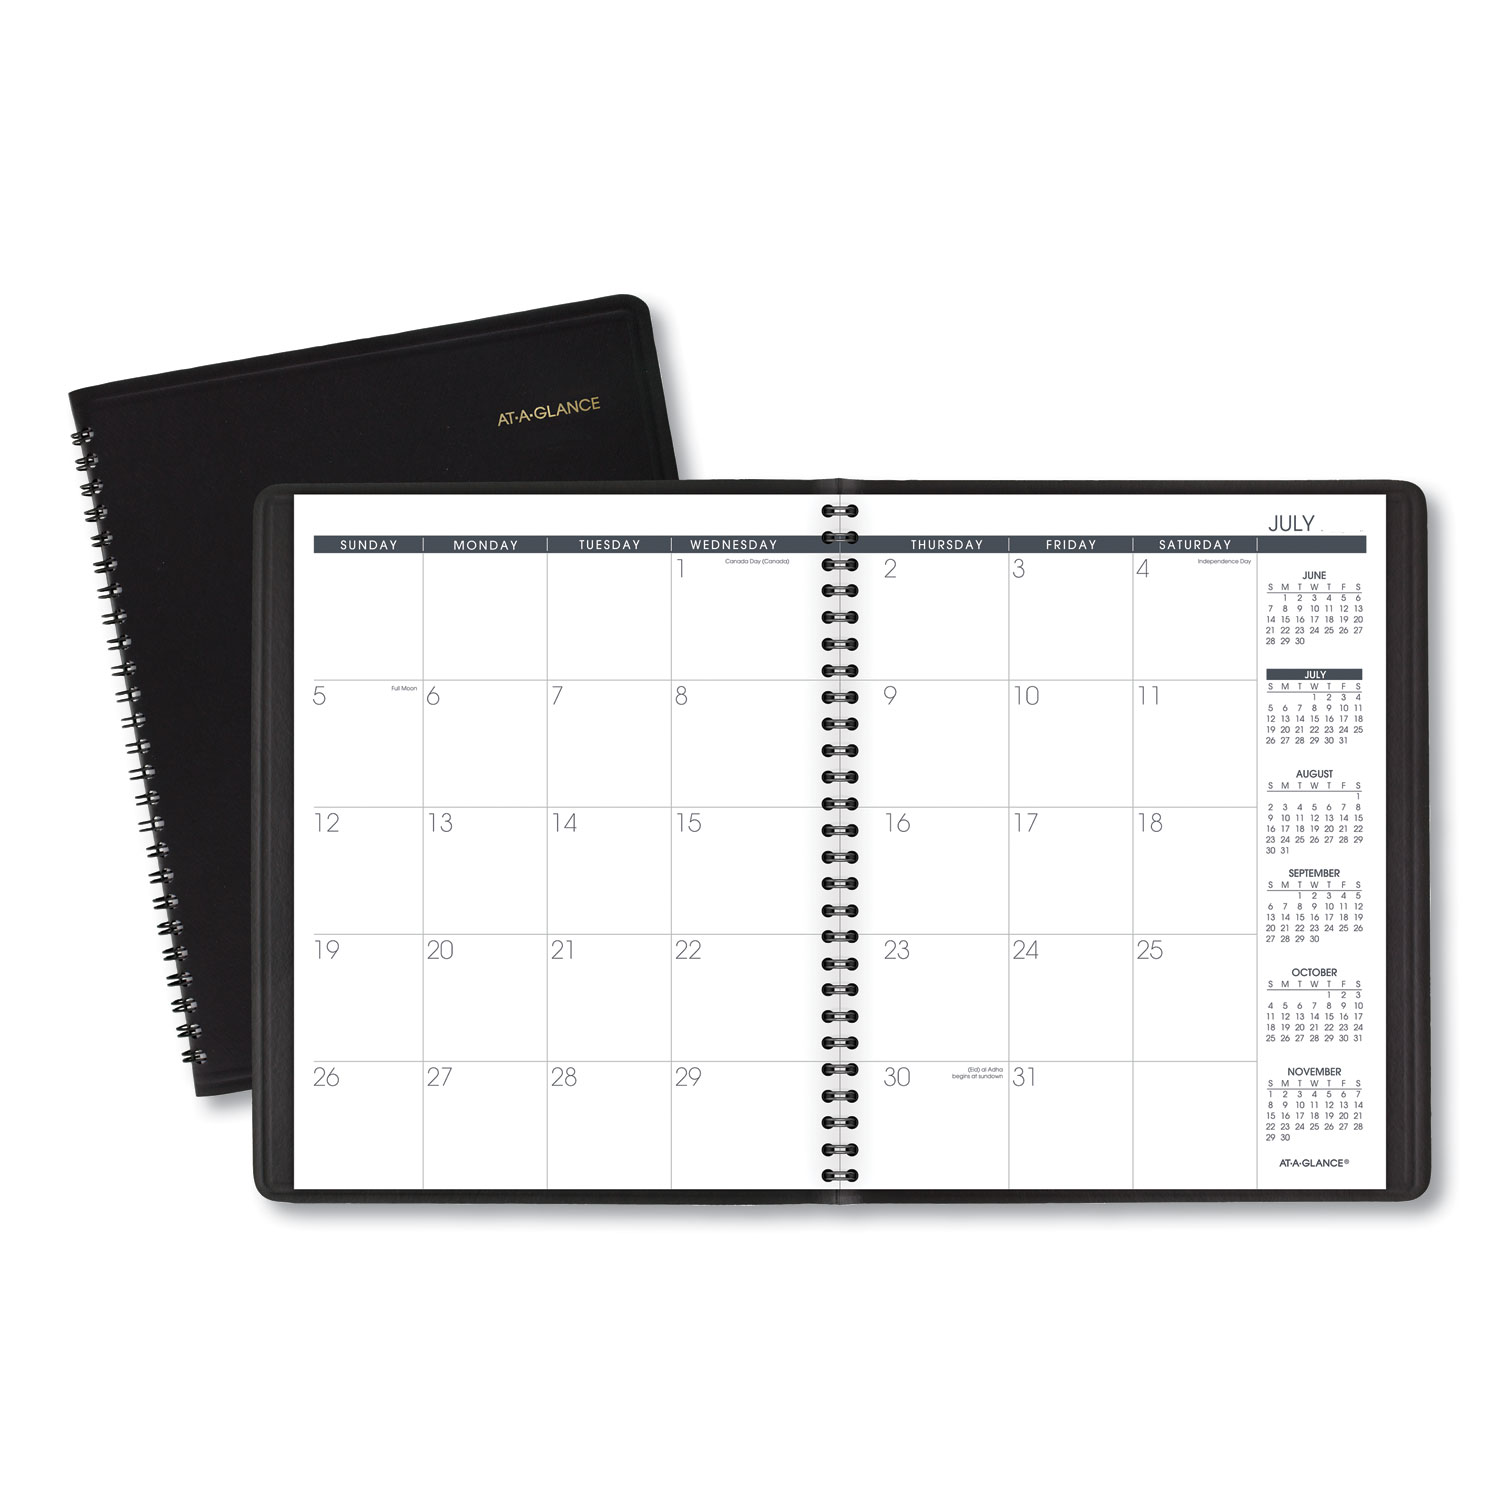 Monthly Planner,8.75 x 7, Black, 2020-2021